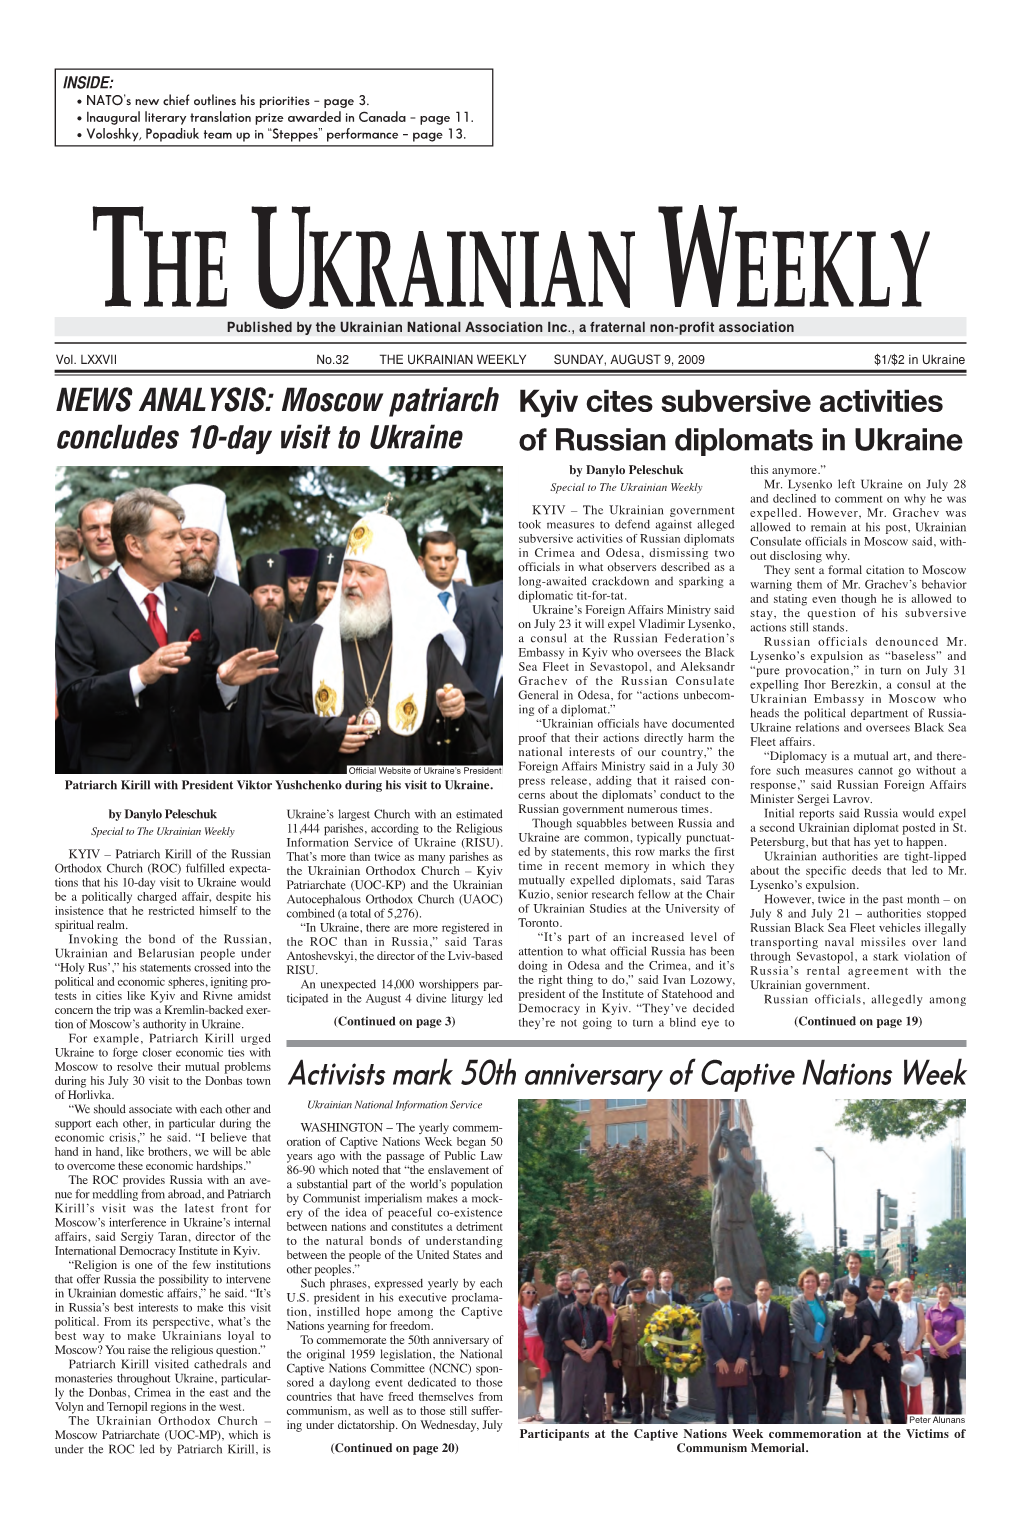 The Ukrainian Weekly 2009, No.32